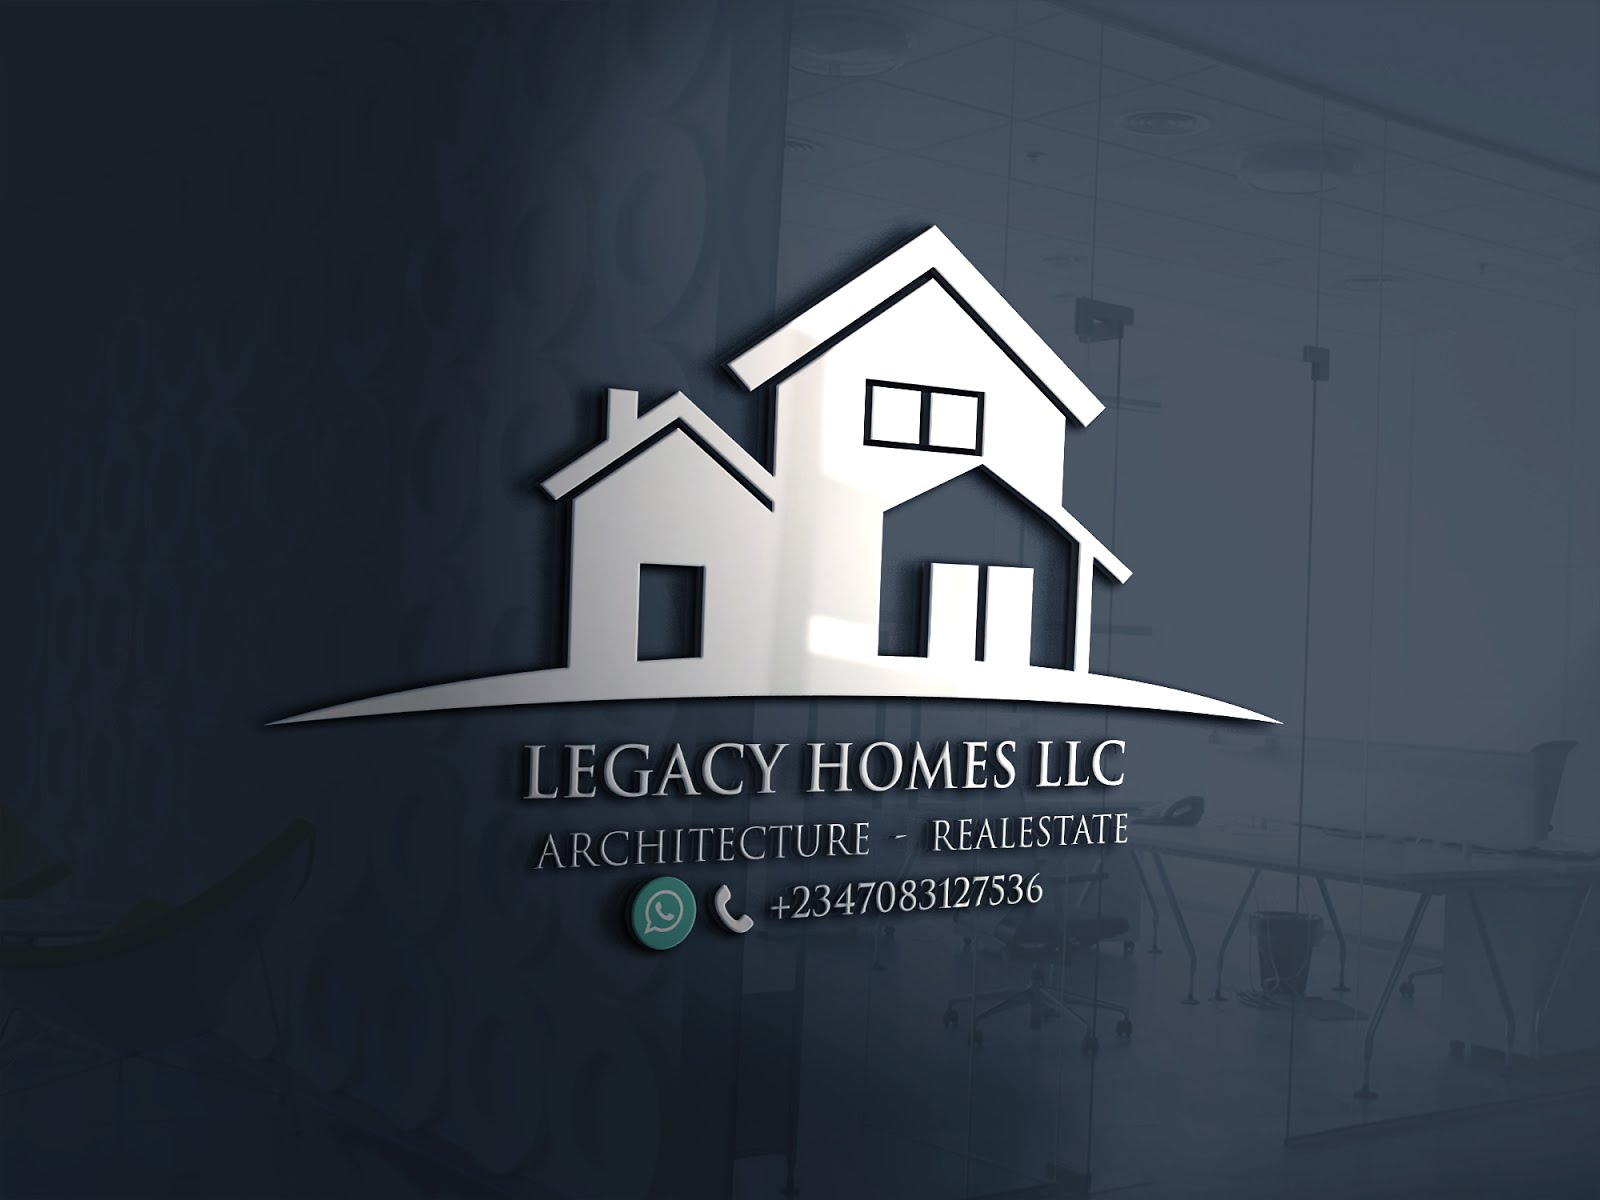 LEGACY HOME LLC